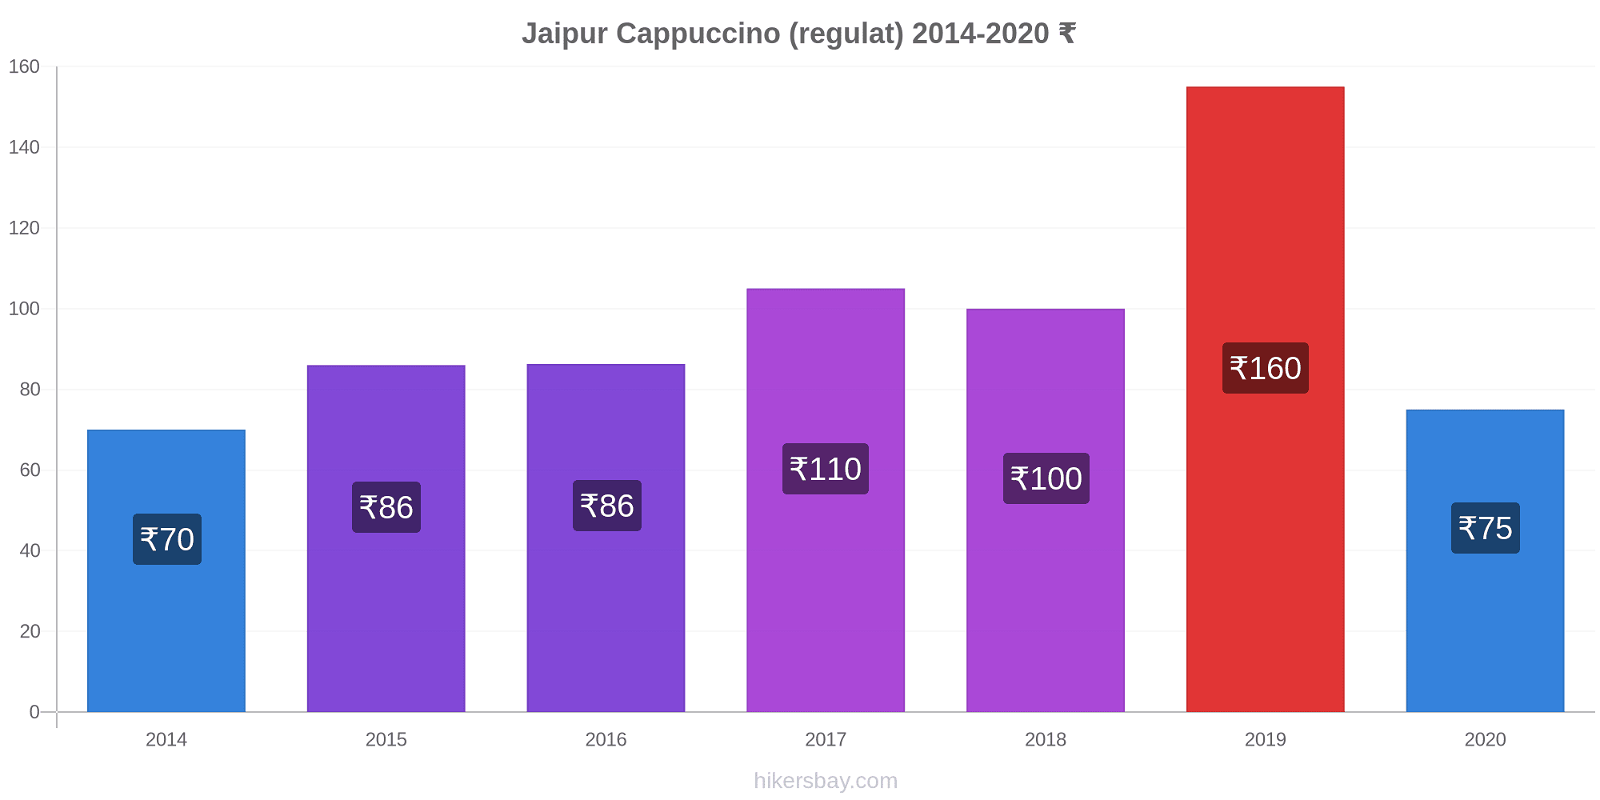 Jaipur modificări de preț Cappuccino (regulat) hikersbay.com